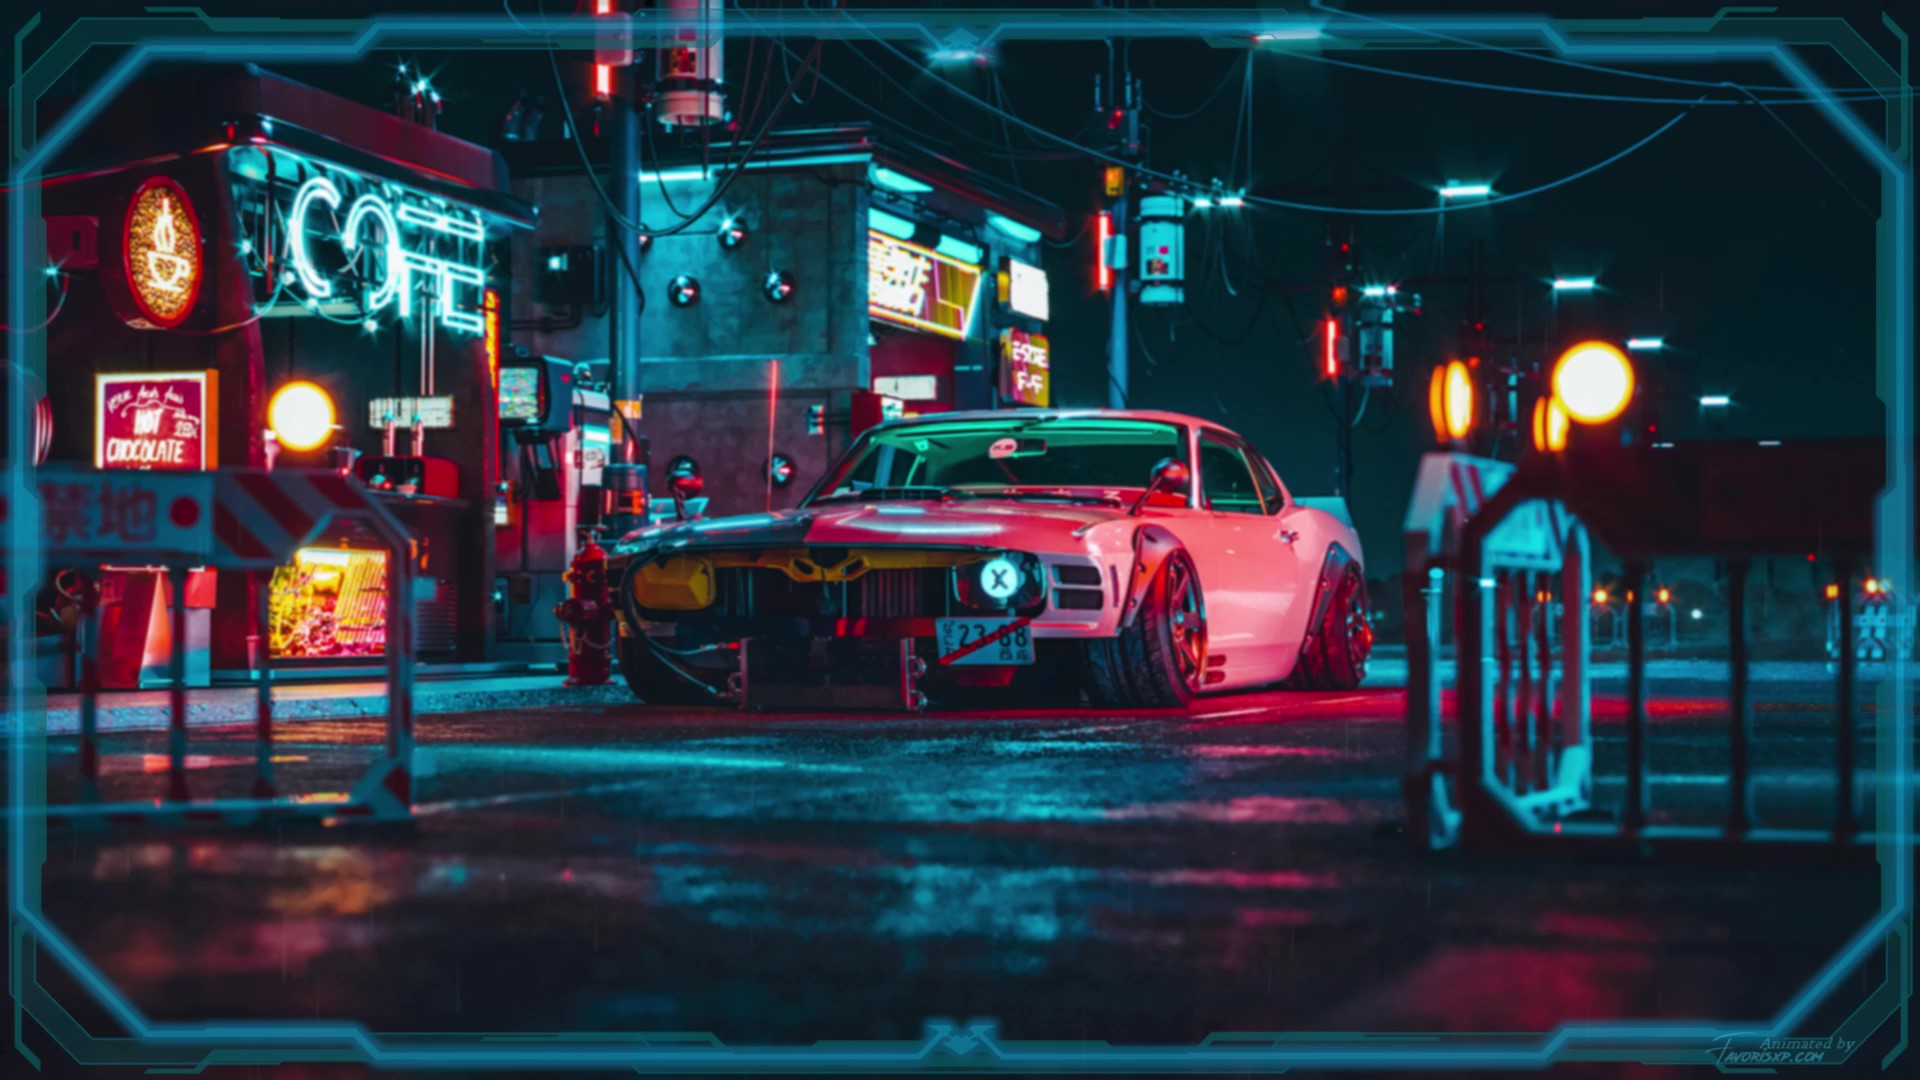 Mustang Shatokan - Car live wallpaper for PC by Favorisxp on DeviantArt